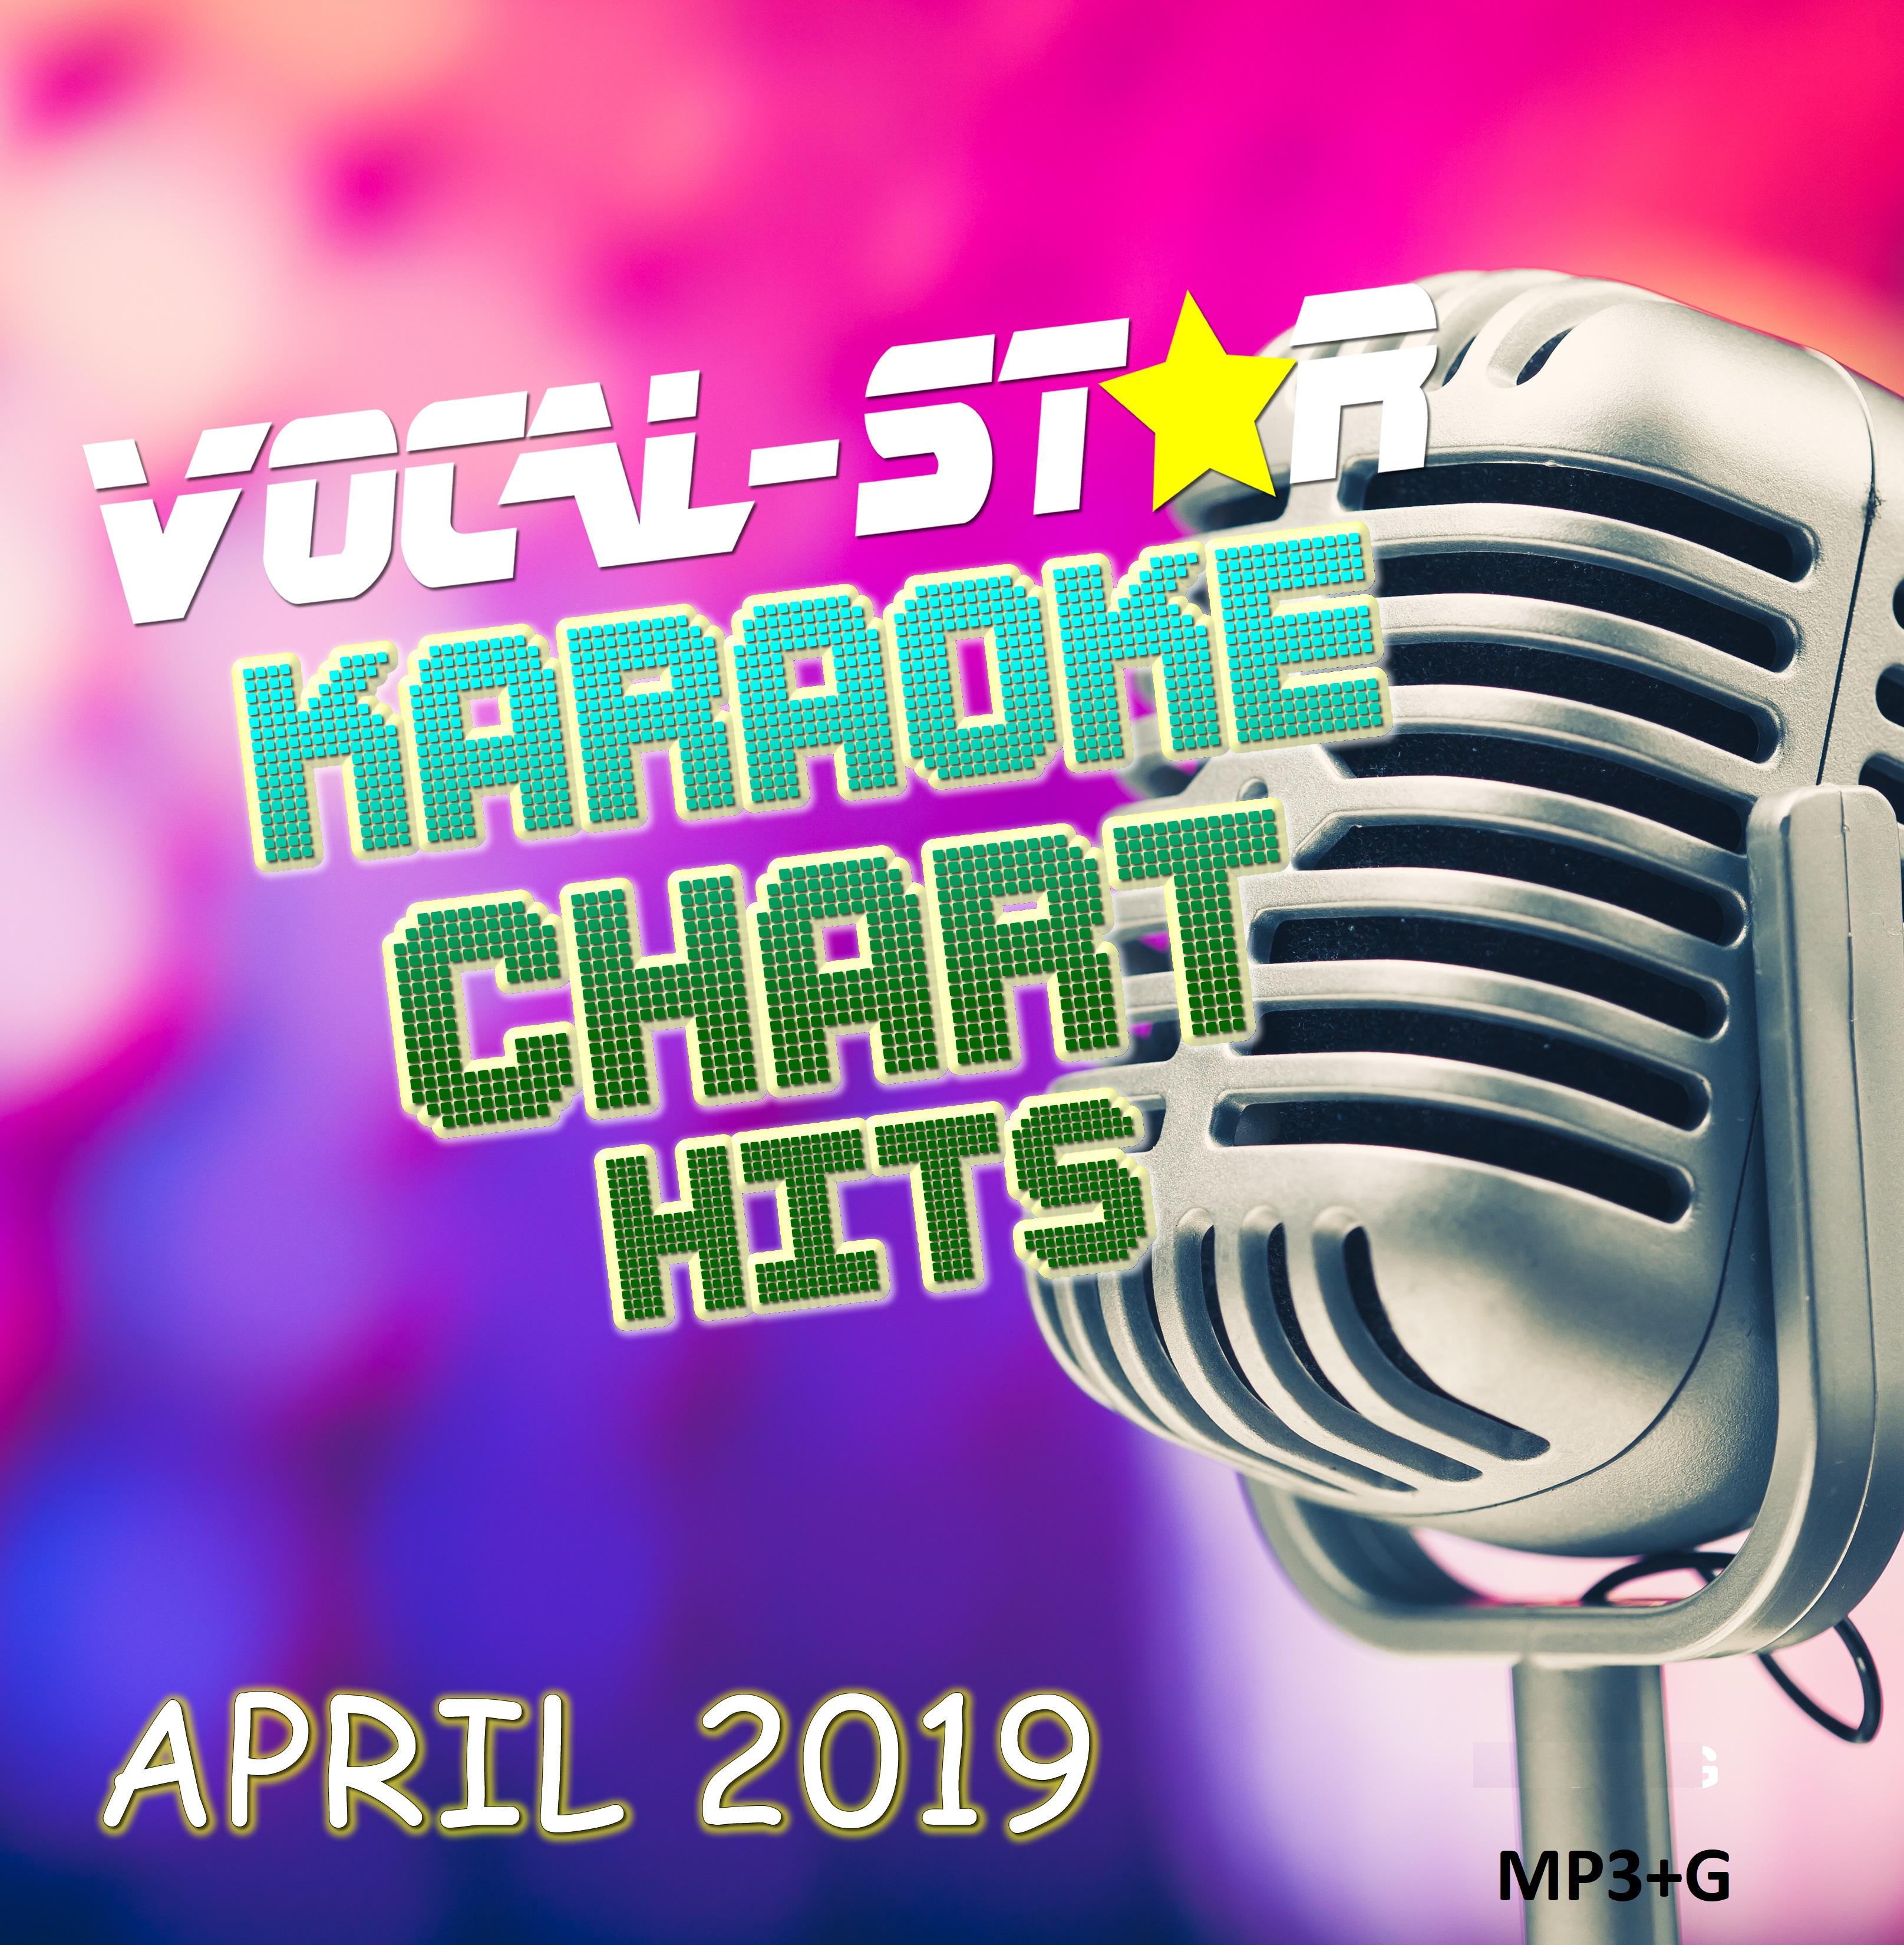 Vocal-Star April 2019 Hits Digital Download